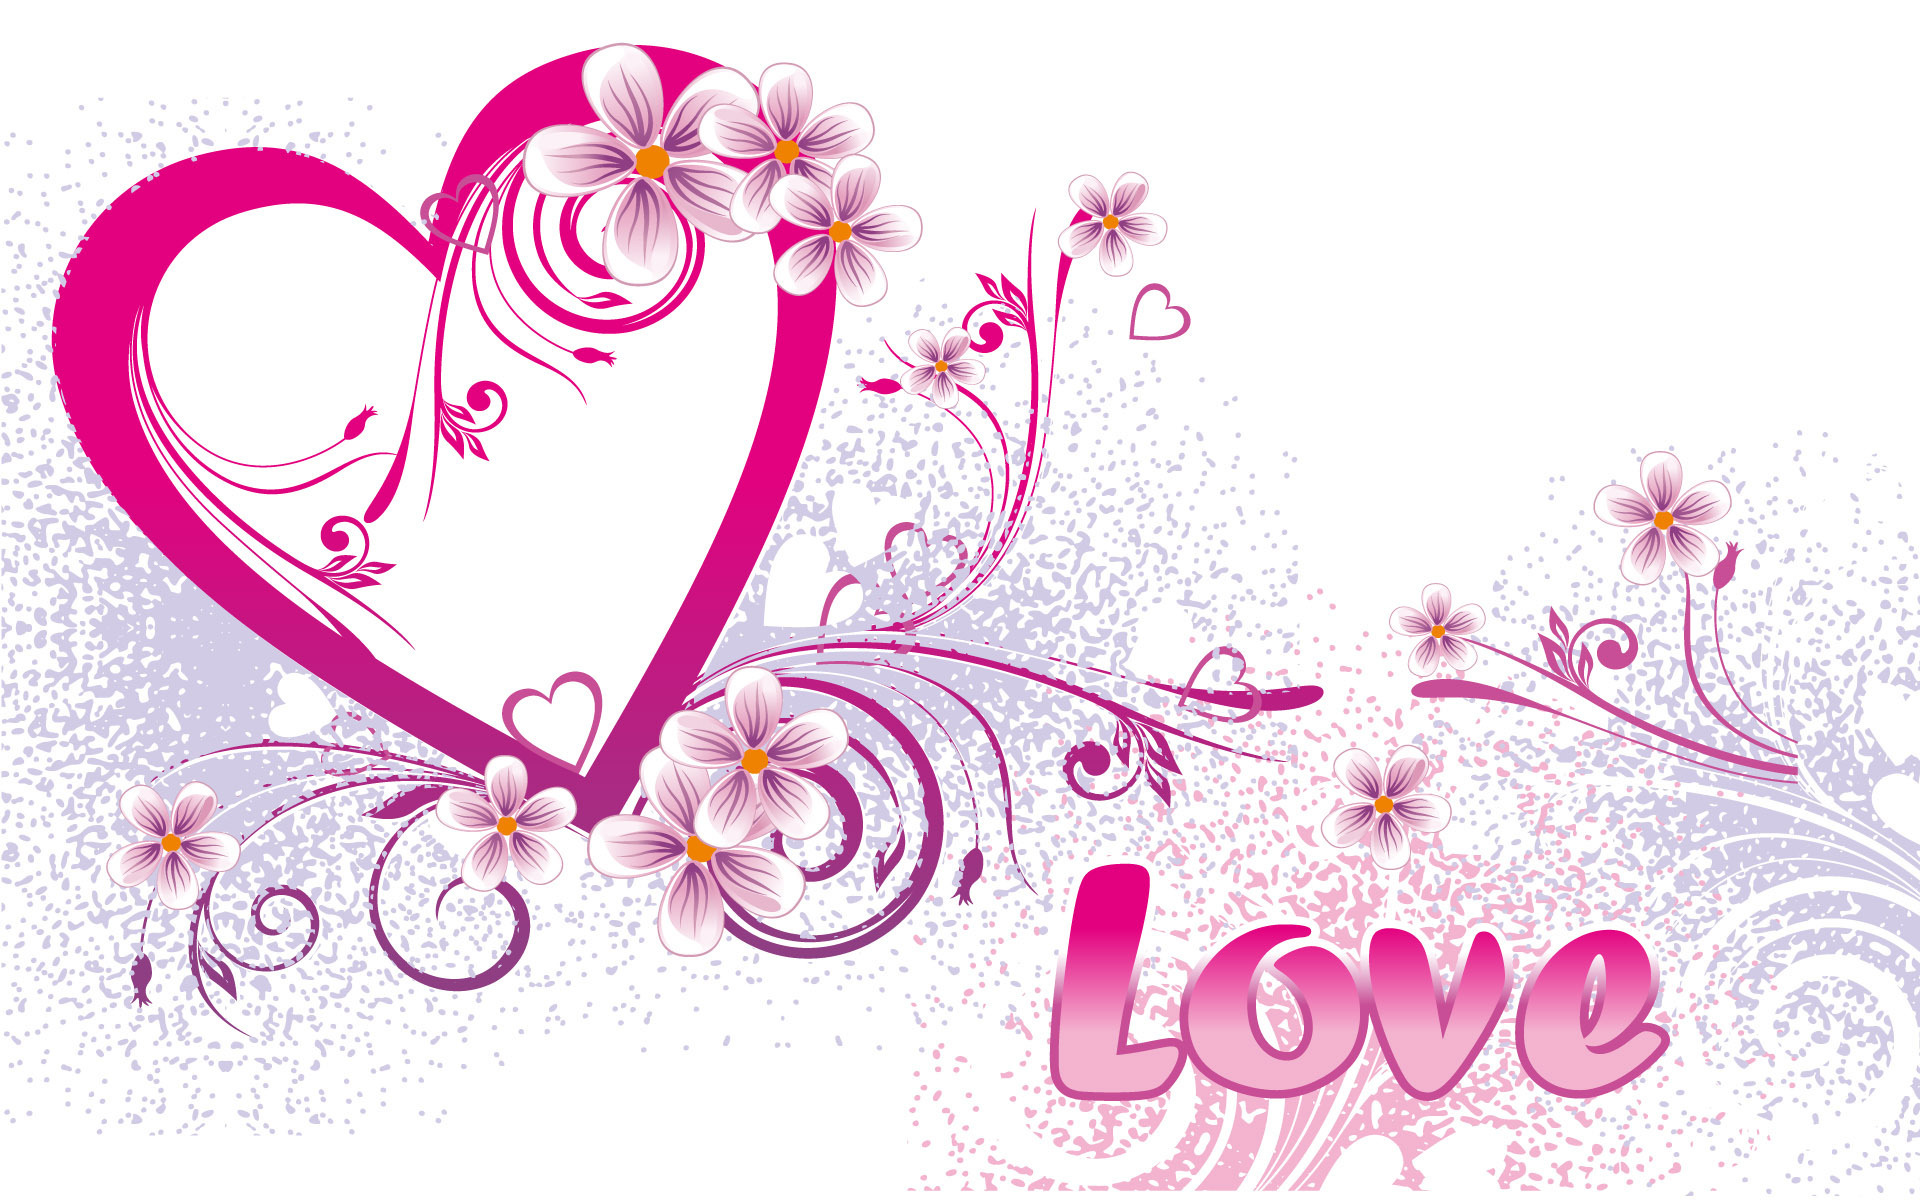 40 Romantic Love Wallpapers -DesignBump